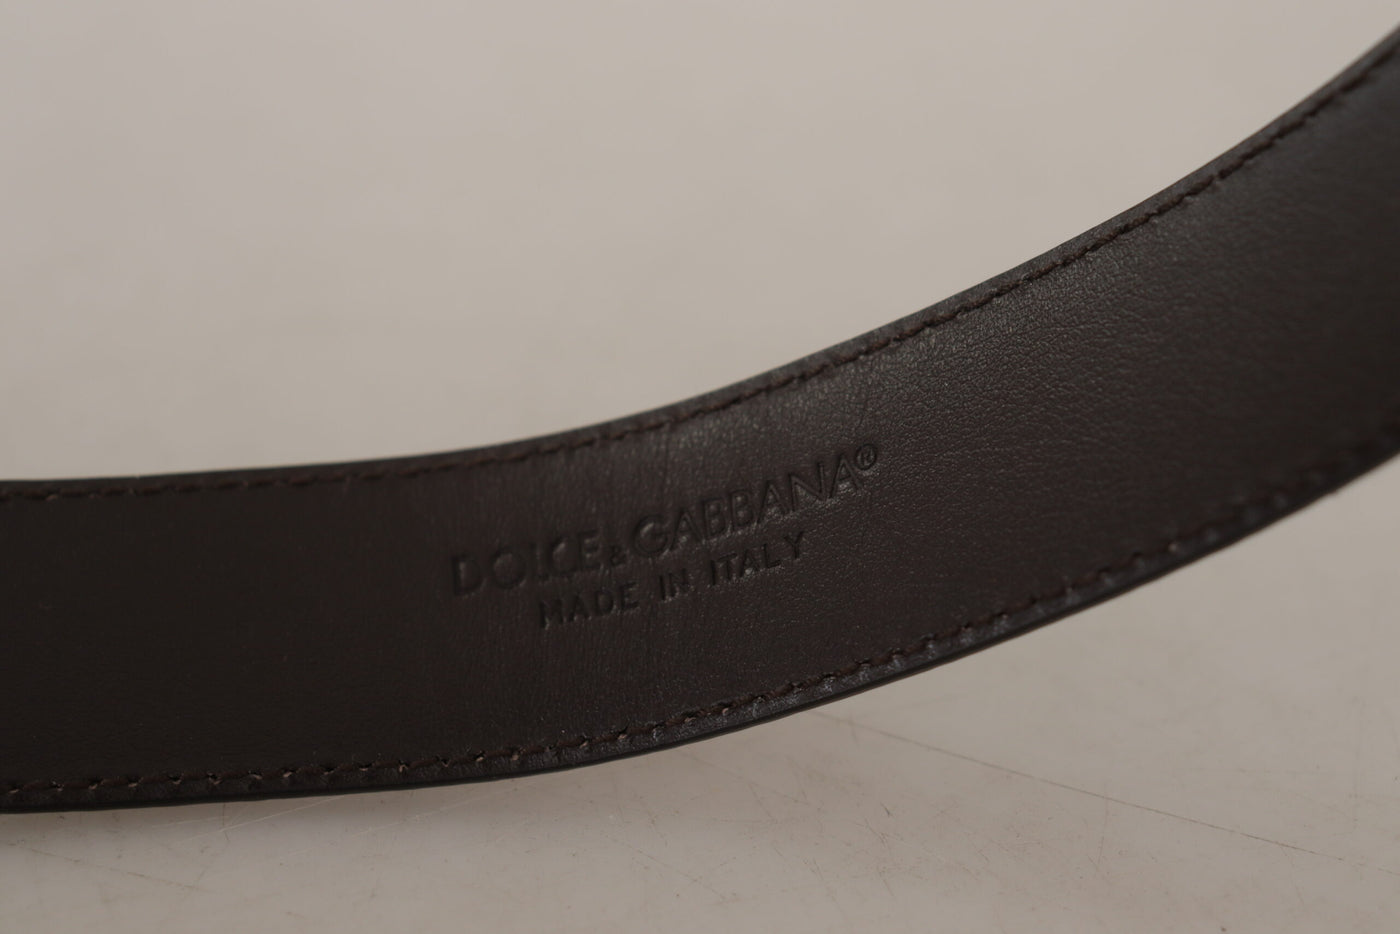 Dolce & Gabbana Brown Amore Animal Print Exotic Leather Logo Buckle Belt